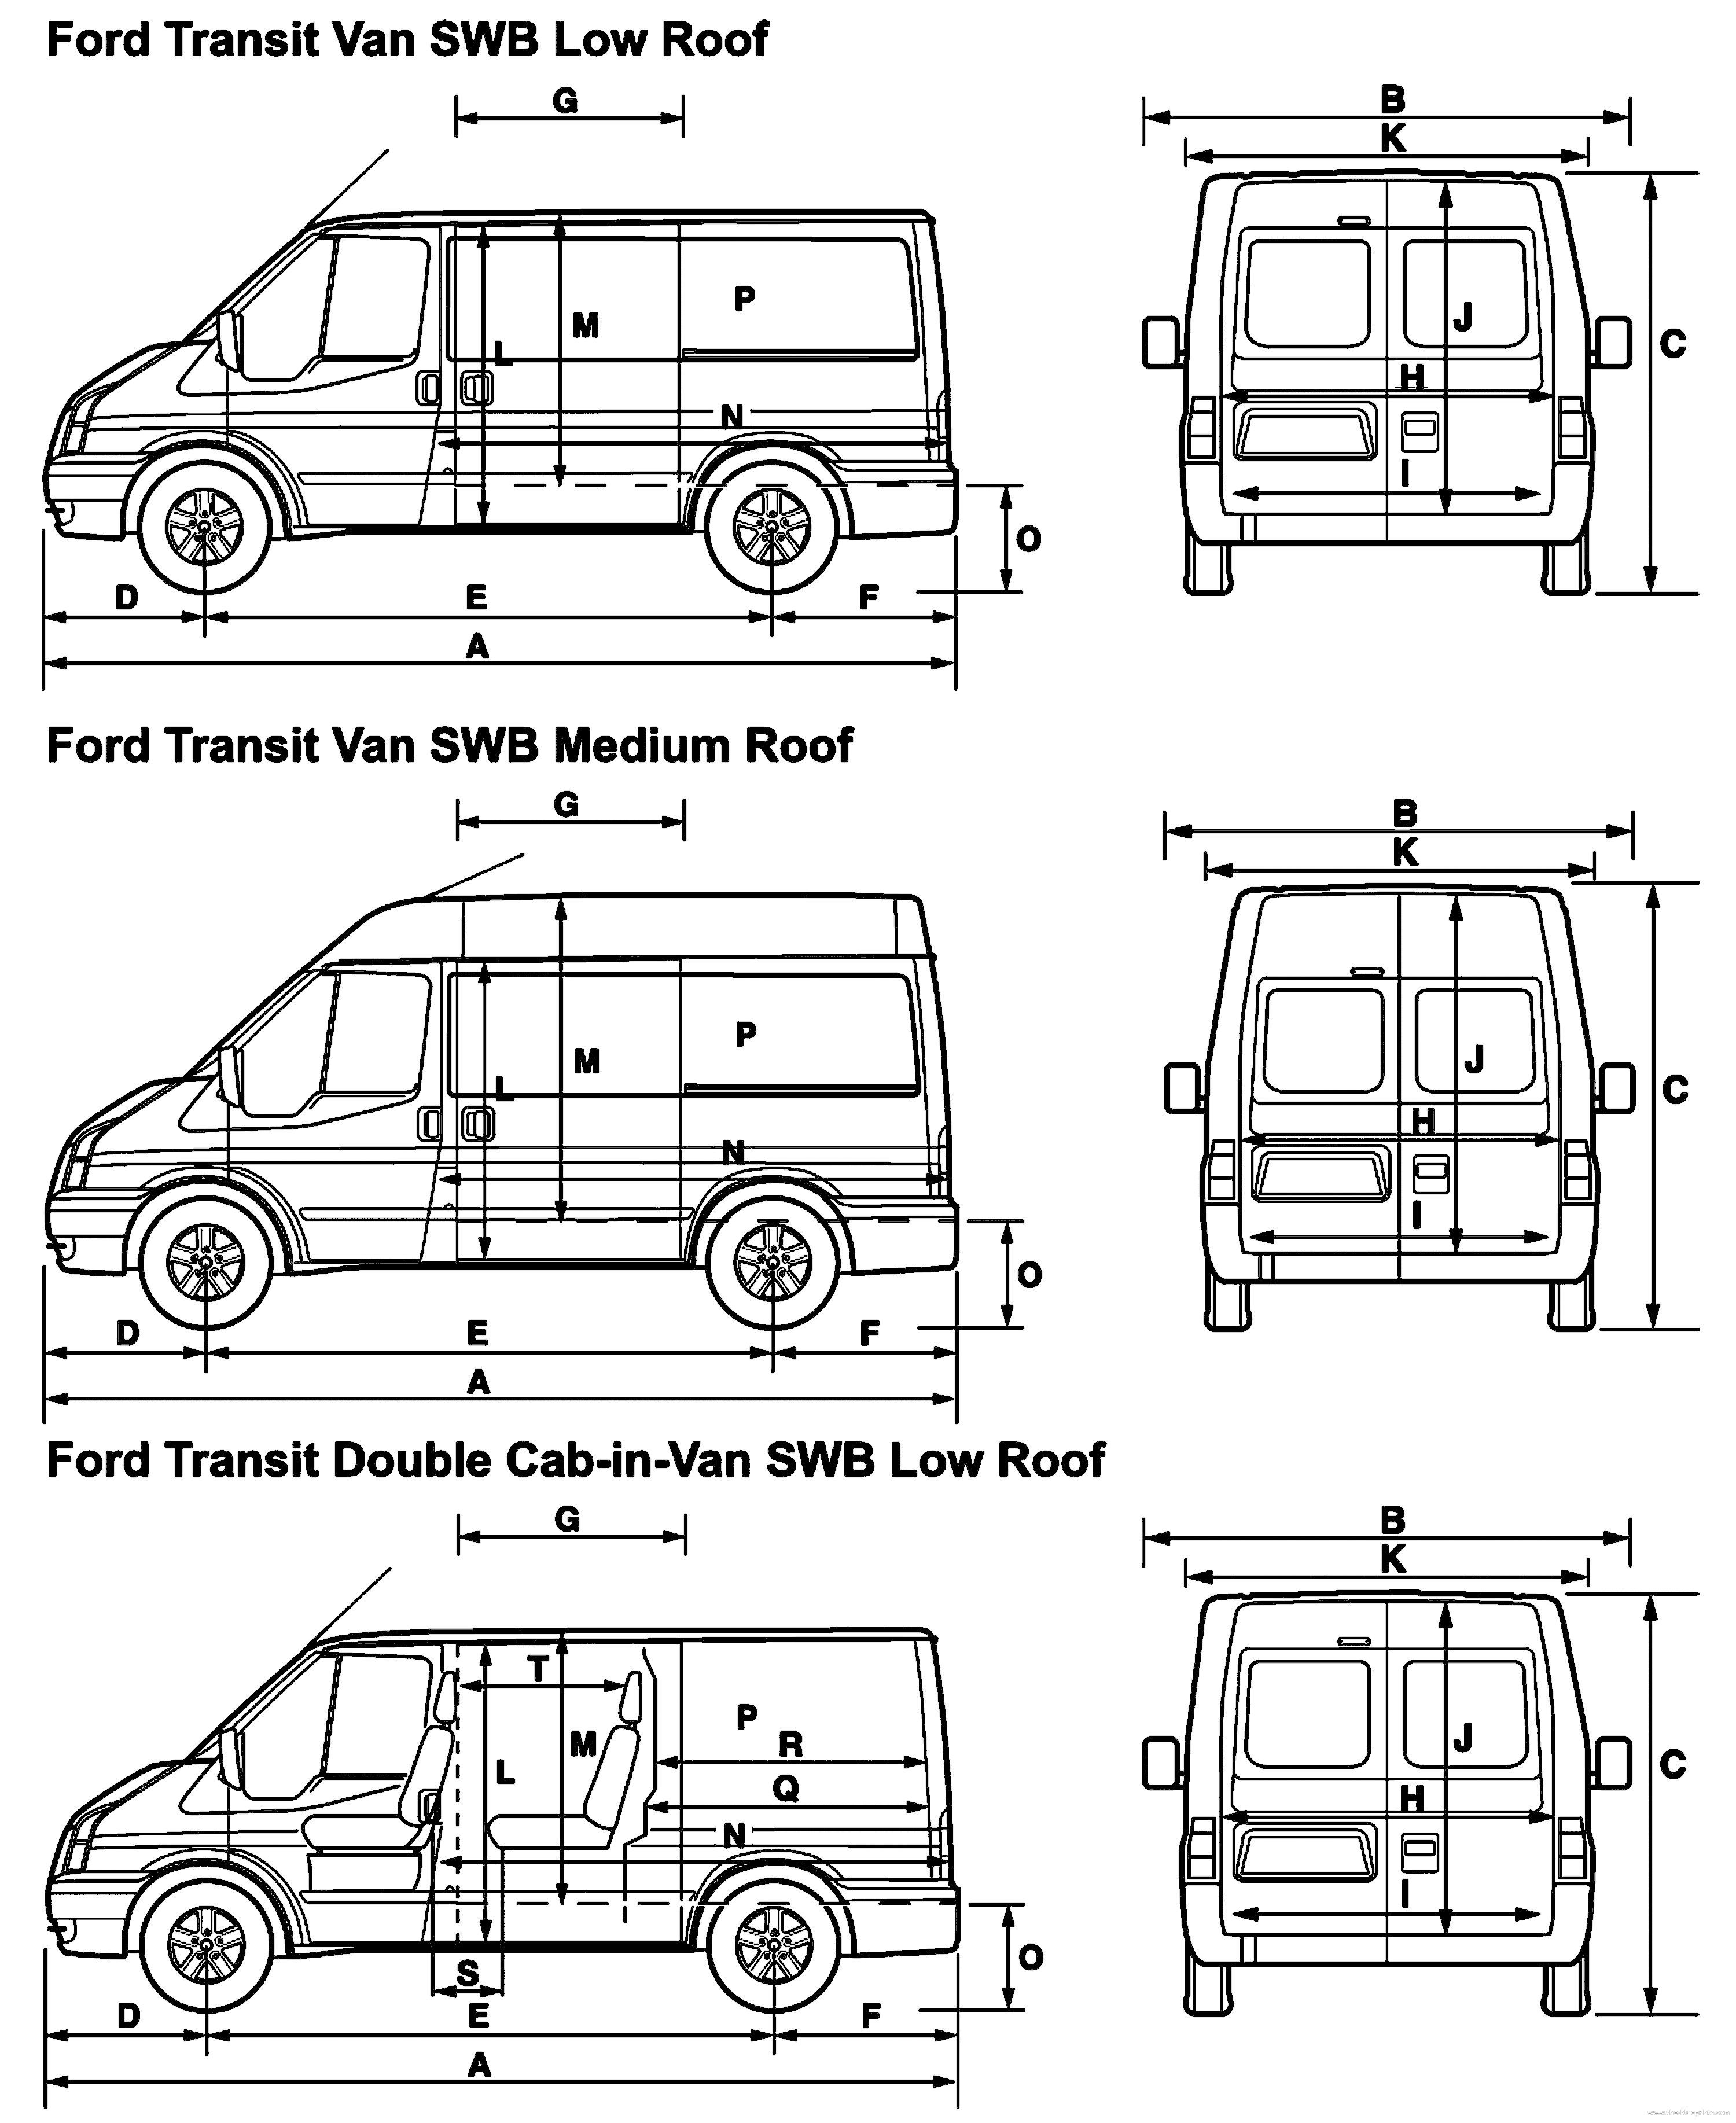 Ford transit van technical drawing #3